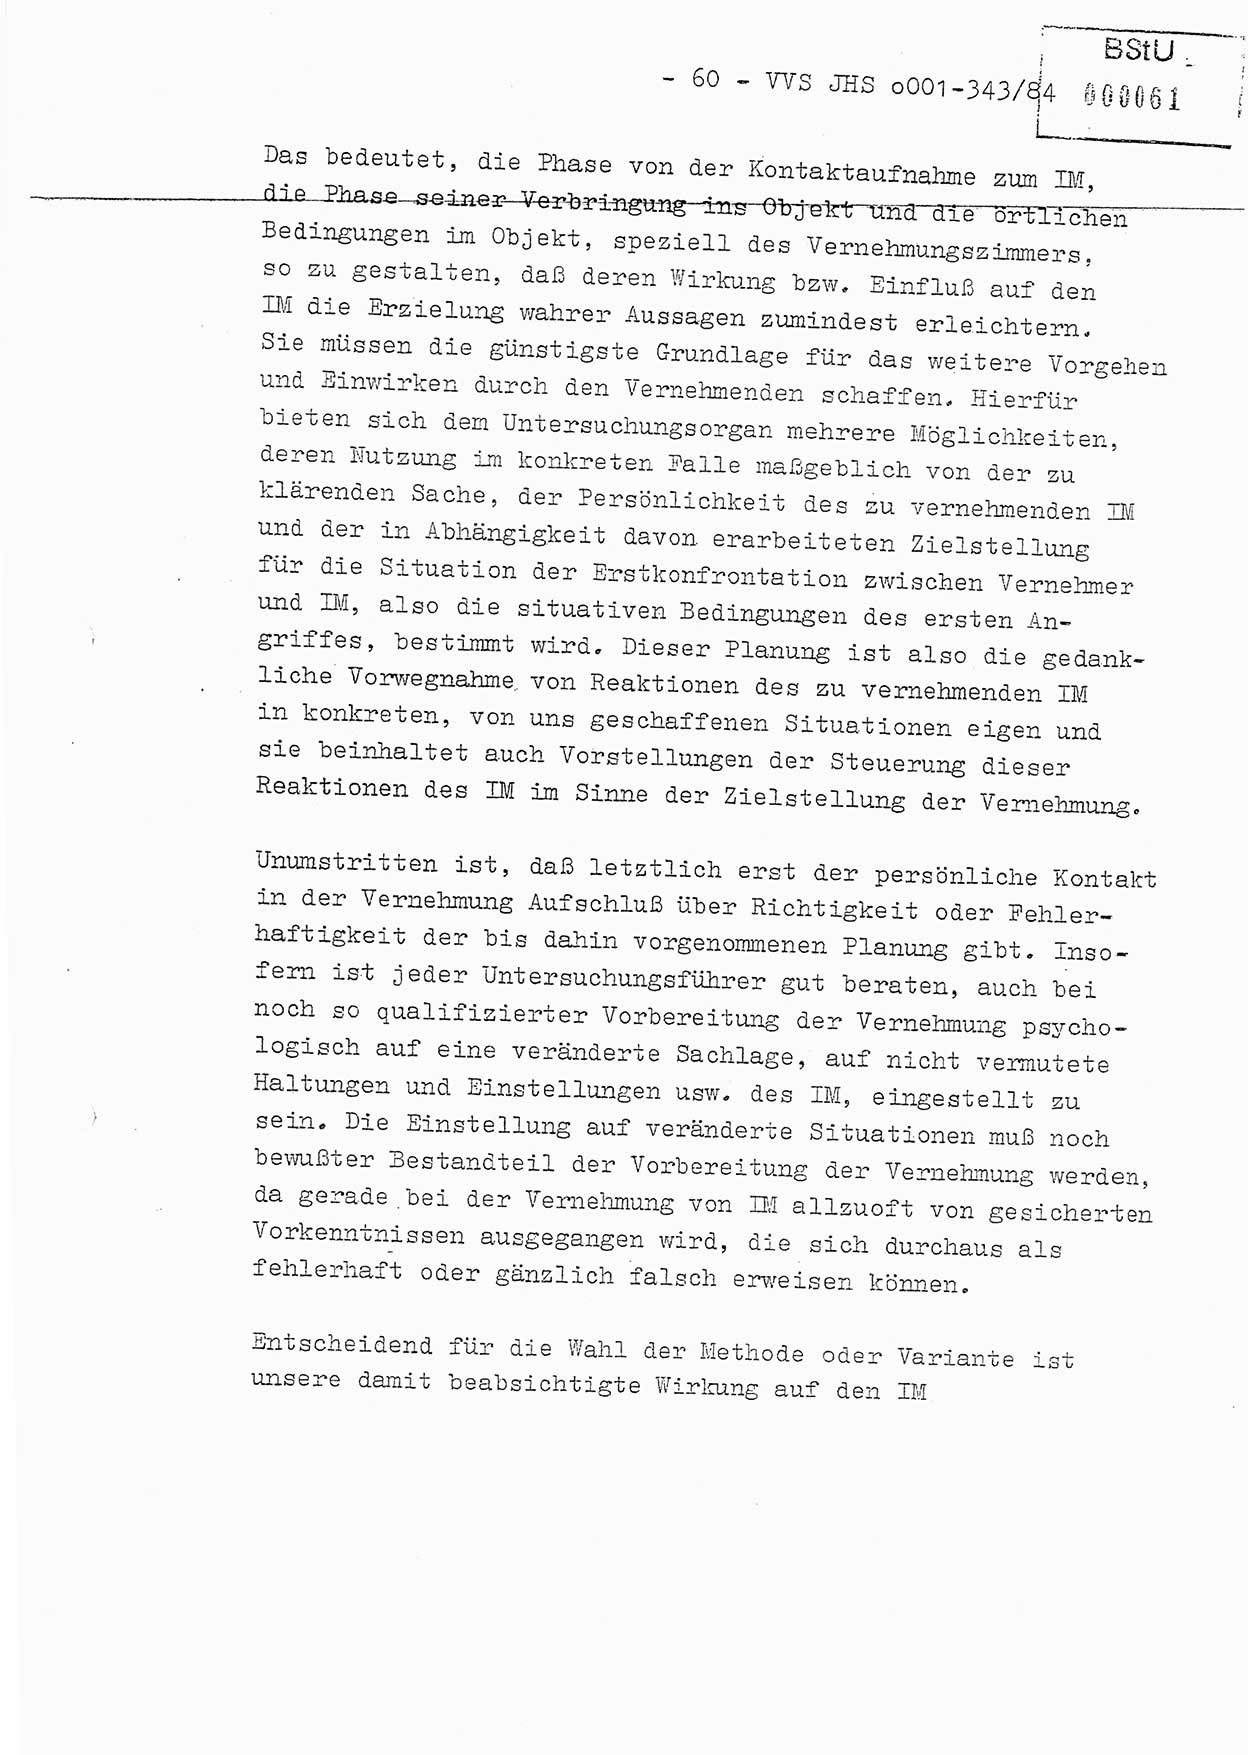 Diplomarbeit, Oberleutnant Bernd Michael (HA Ⅸ/5), Oberleutnant Peter Felber (HA IX/5), Ministerium für Staatssicherheit (MfS) [Deutsche Demokratische Republik (DDR)], Juristische Hochschule (JHS), Vertrauliche Verschlußsache (VVS) o001-343/84, Potsdam 1985, Seite 60 (Dipl.-Arb. MfS DDR JHS VVS o001-343/84 1985, S. 60)